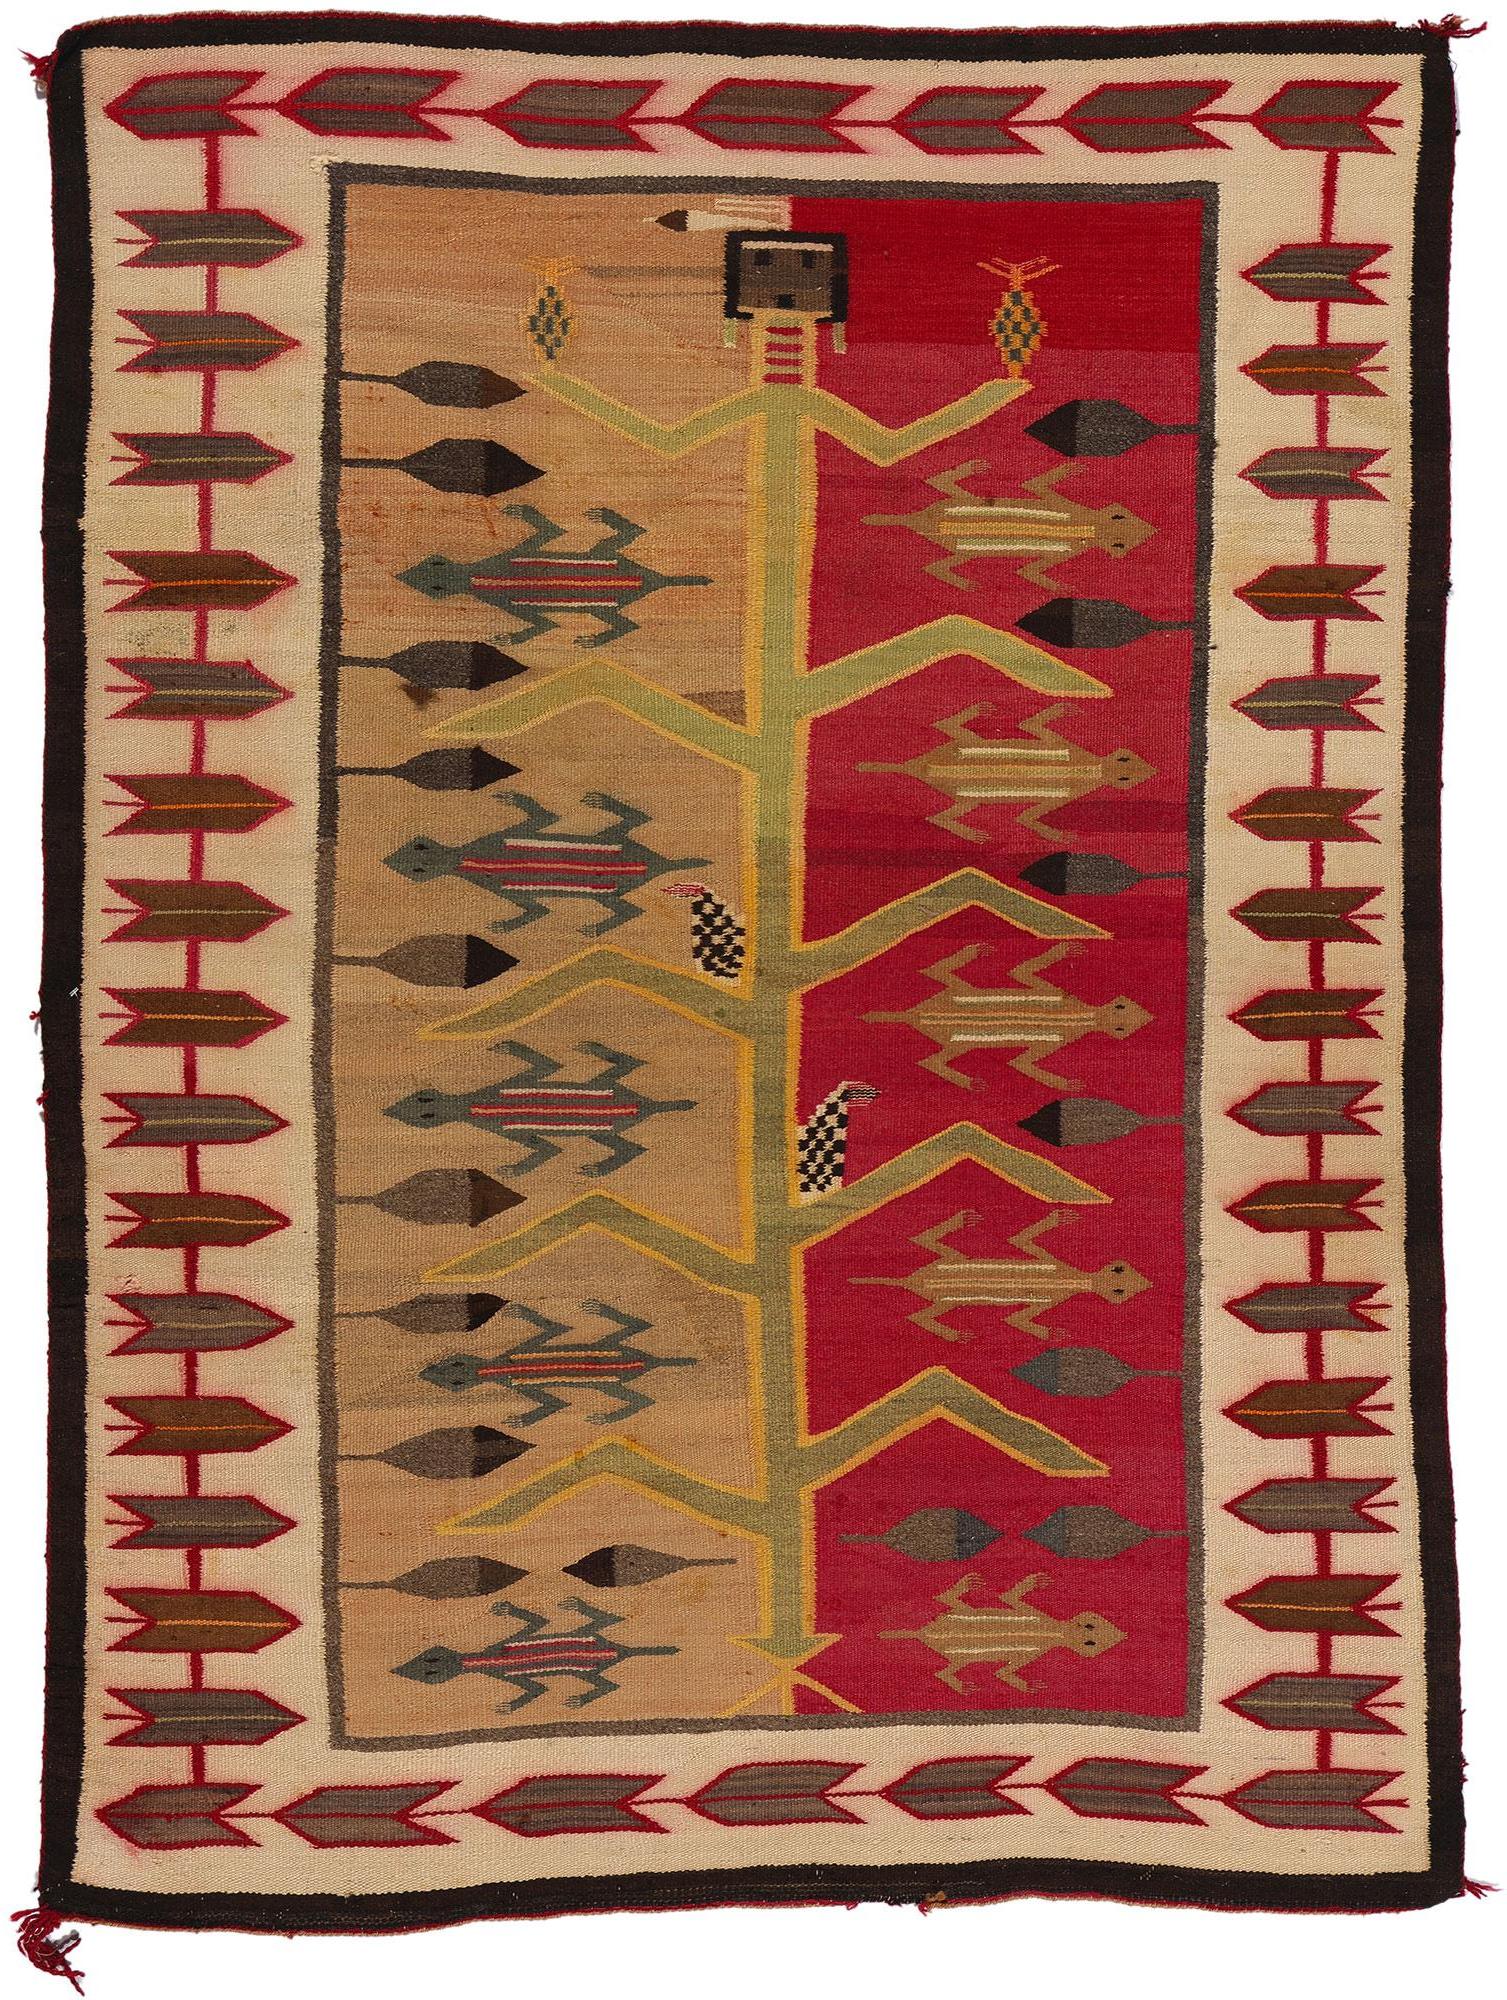 Antike Navajo Deckenbaum des Lebens Yei Bi Chai Native American Textile, 1920er Jahre